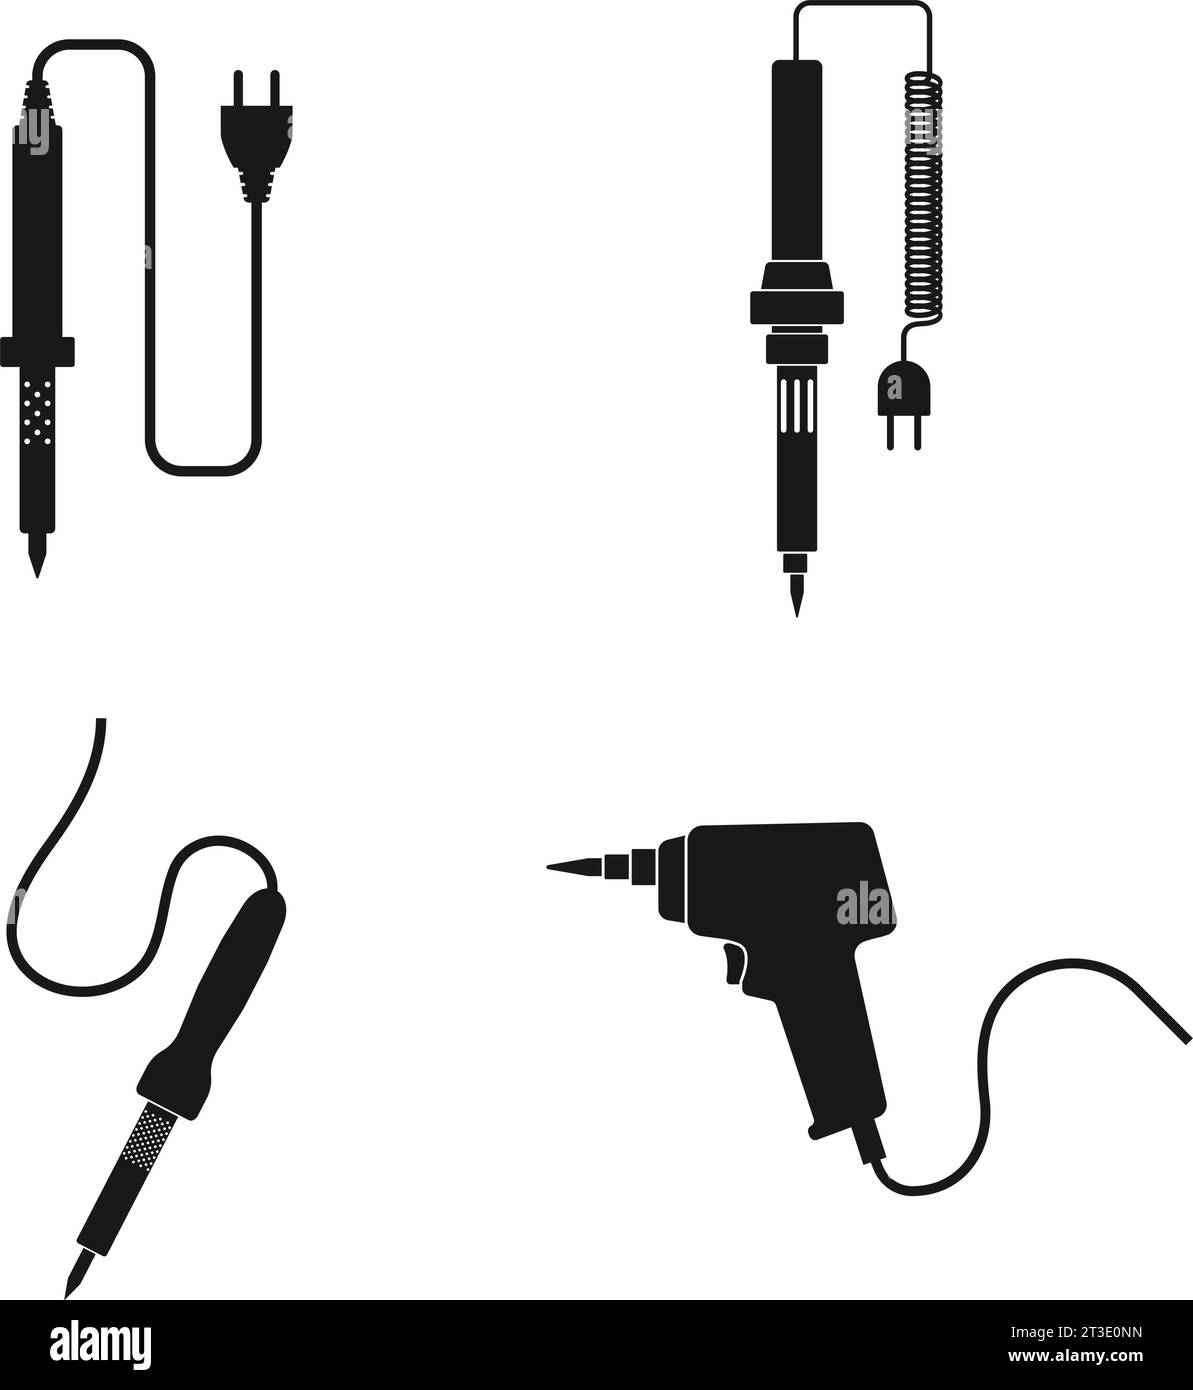 soldering tool icon vector illustration design Stock Vector